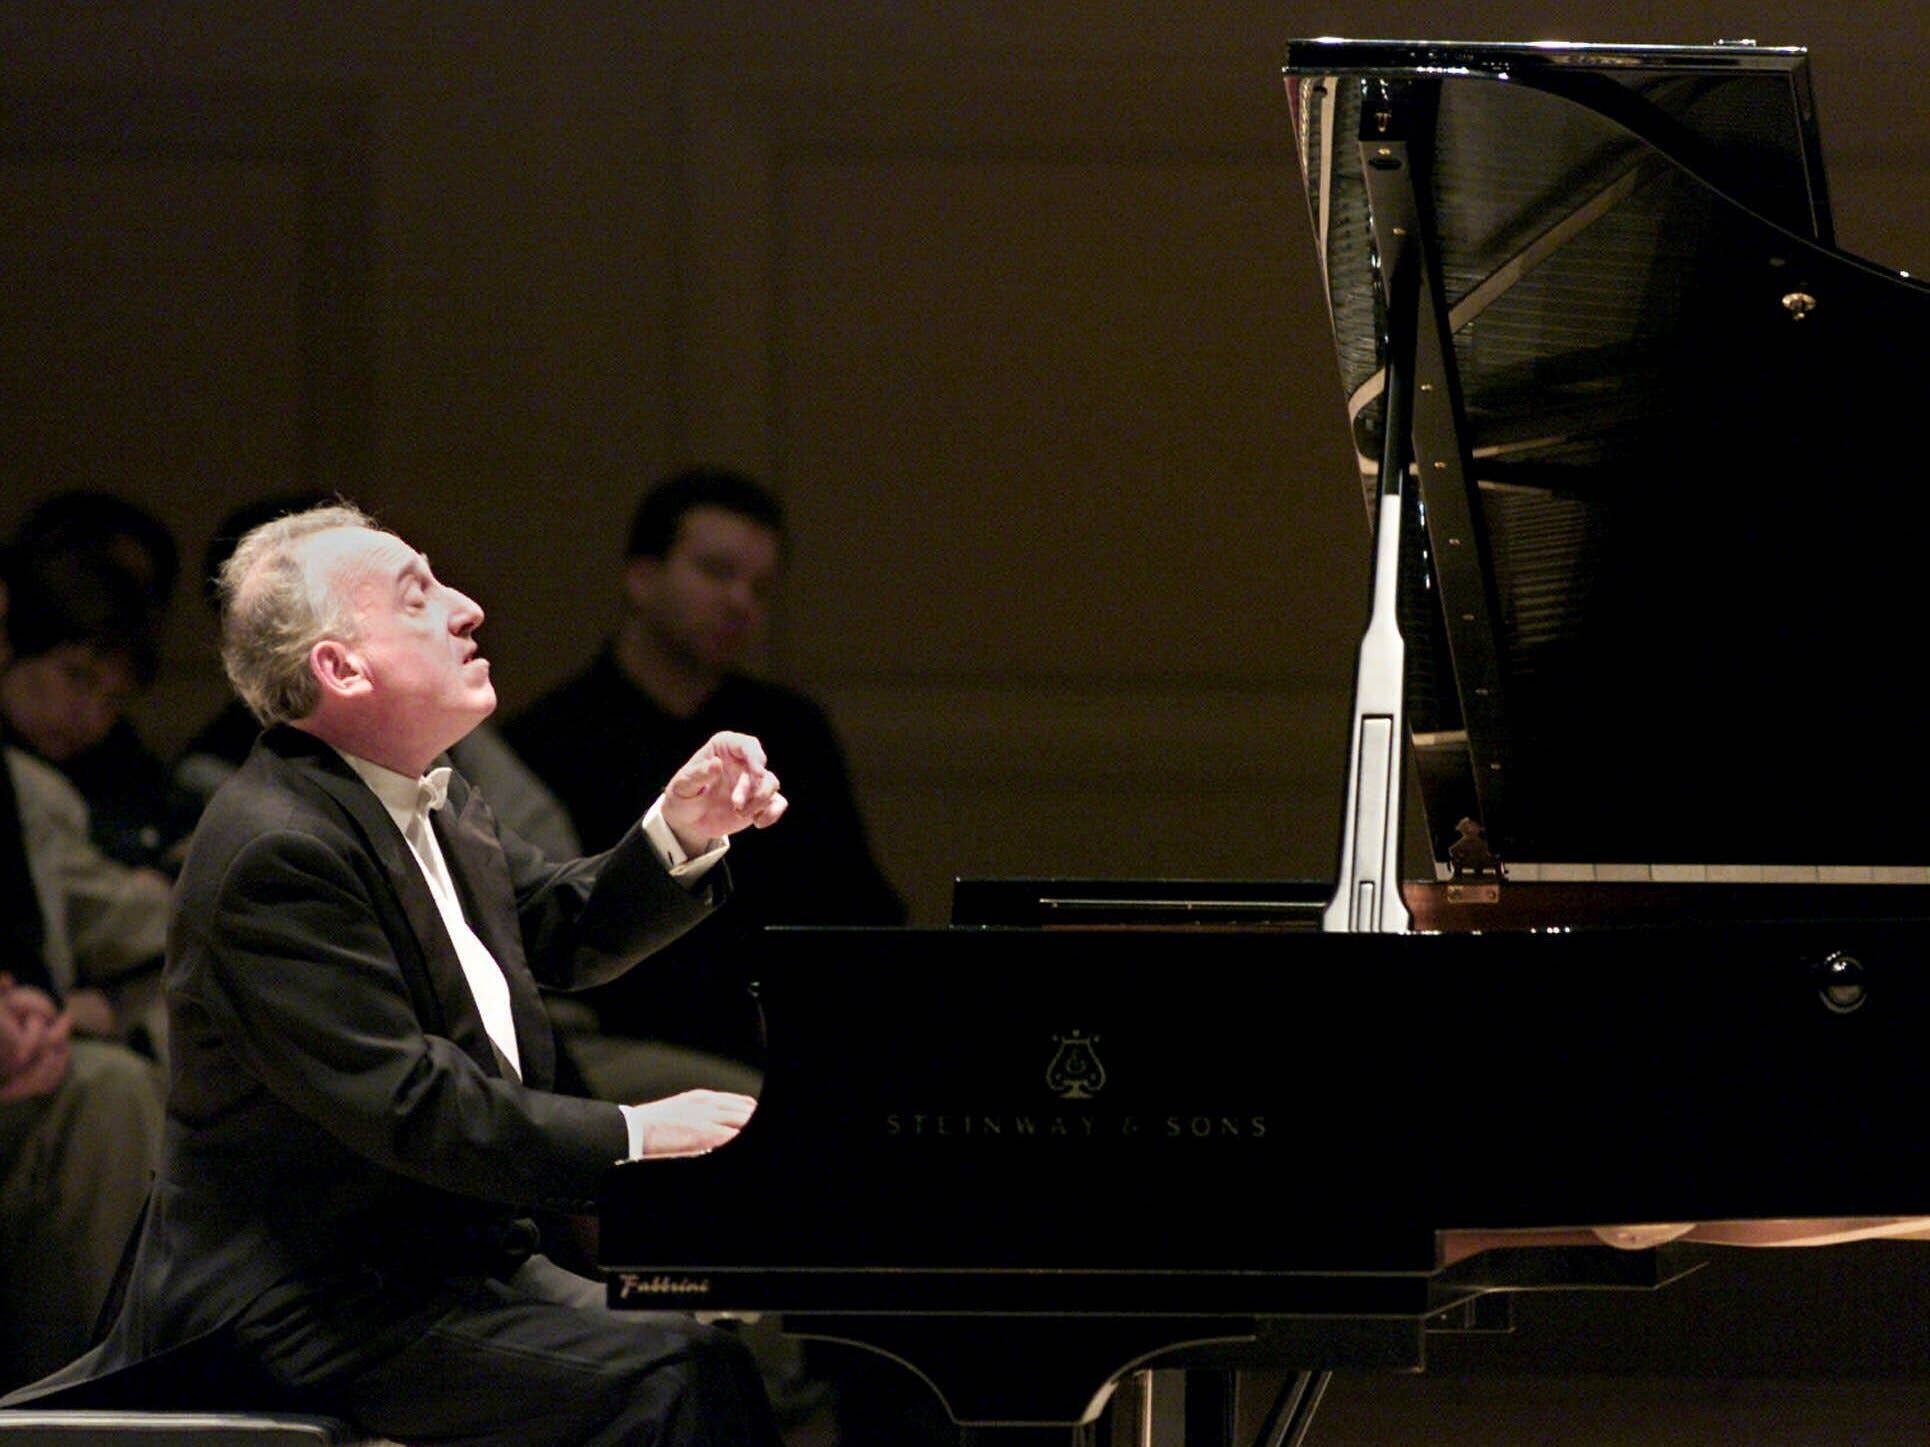 Italian pianist Maurizio Pollini, who performed at La Scala, dies aged 82